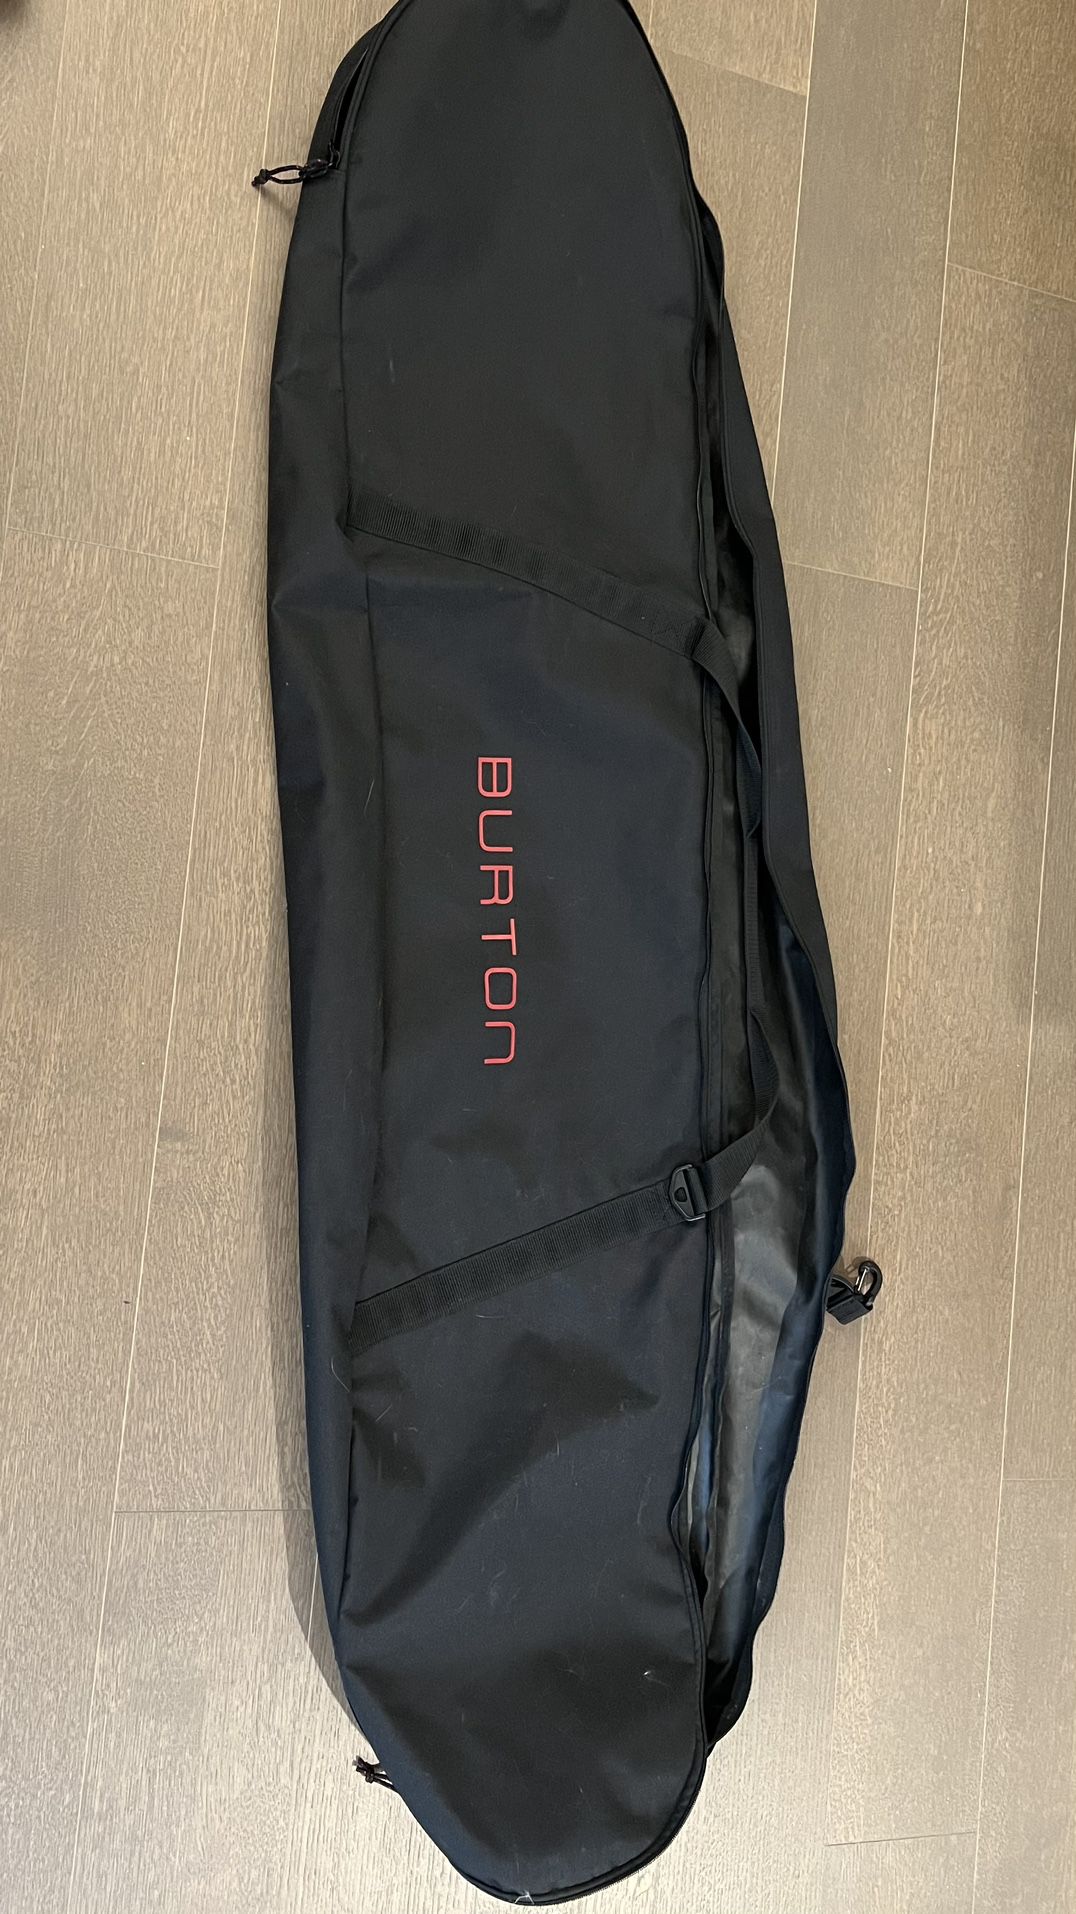 Used burton snowboard bag